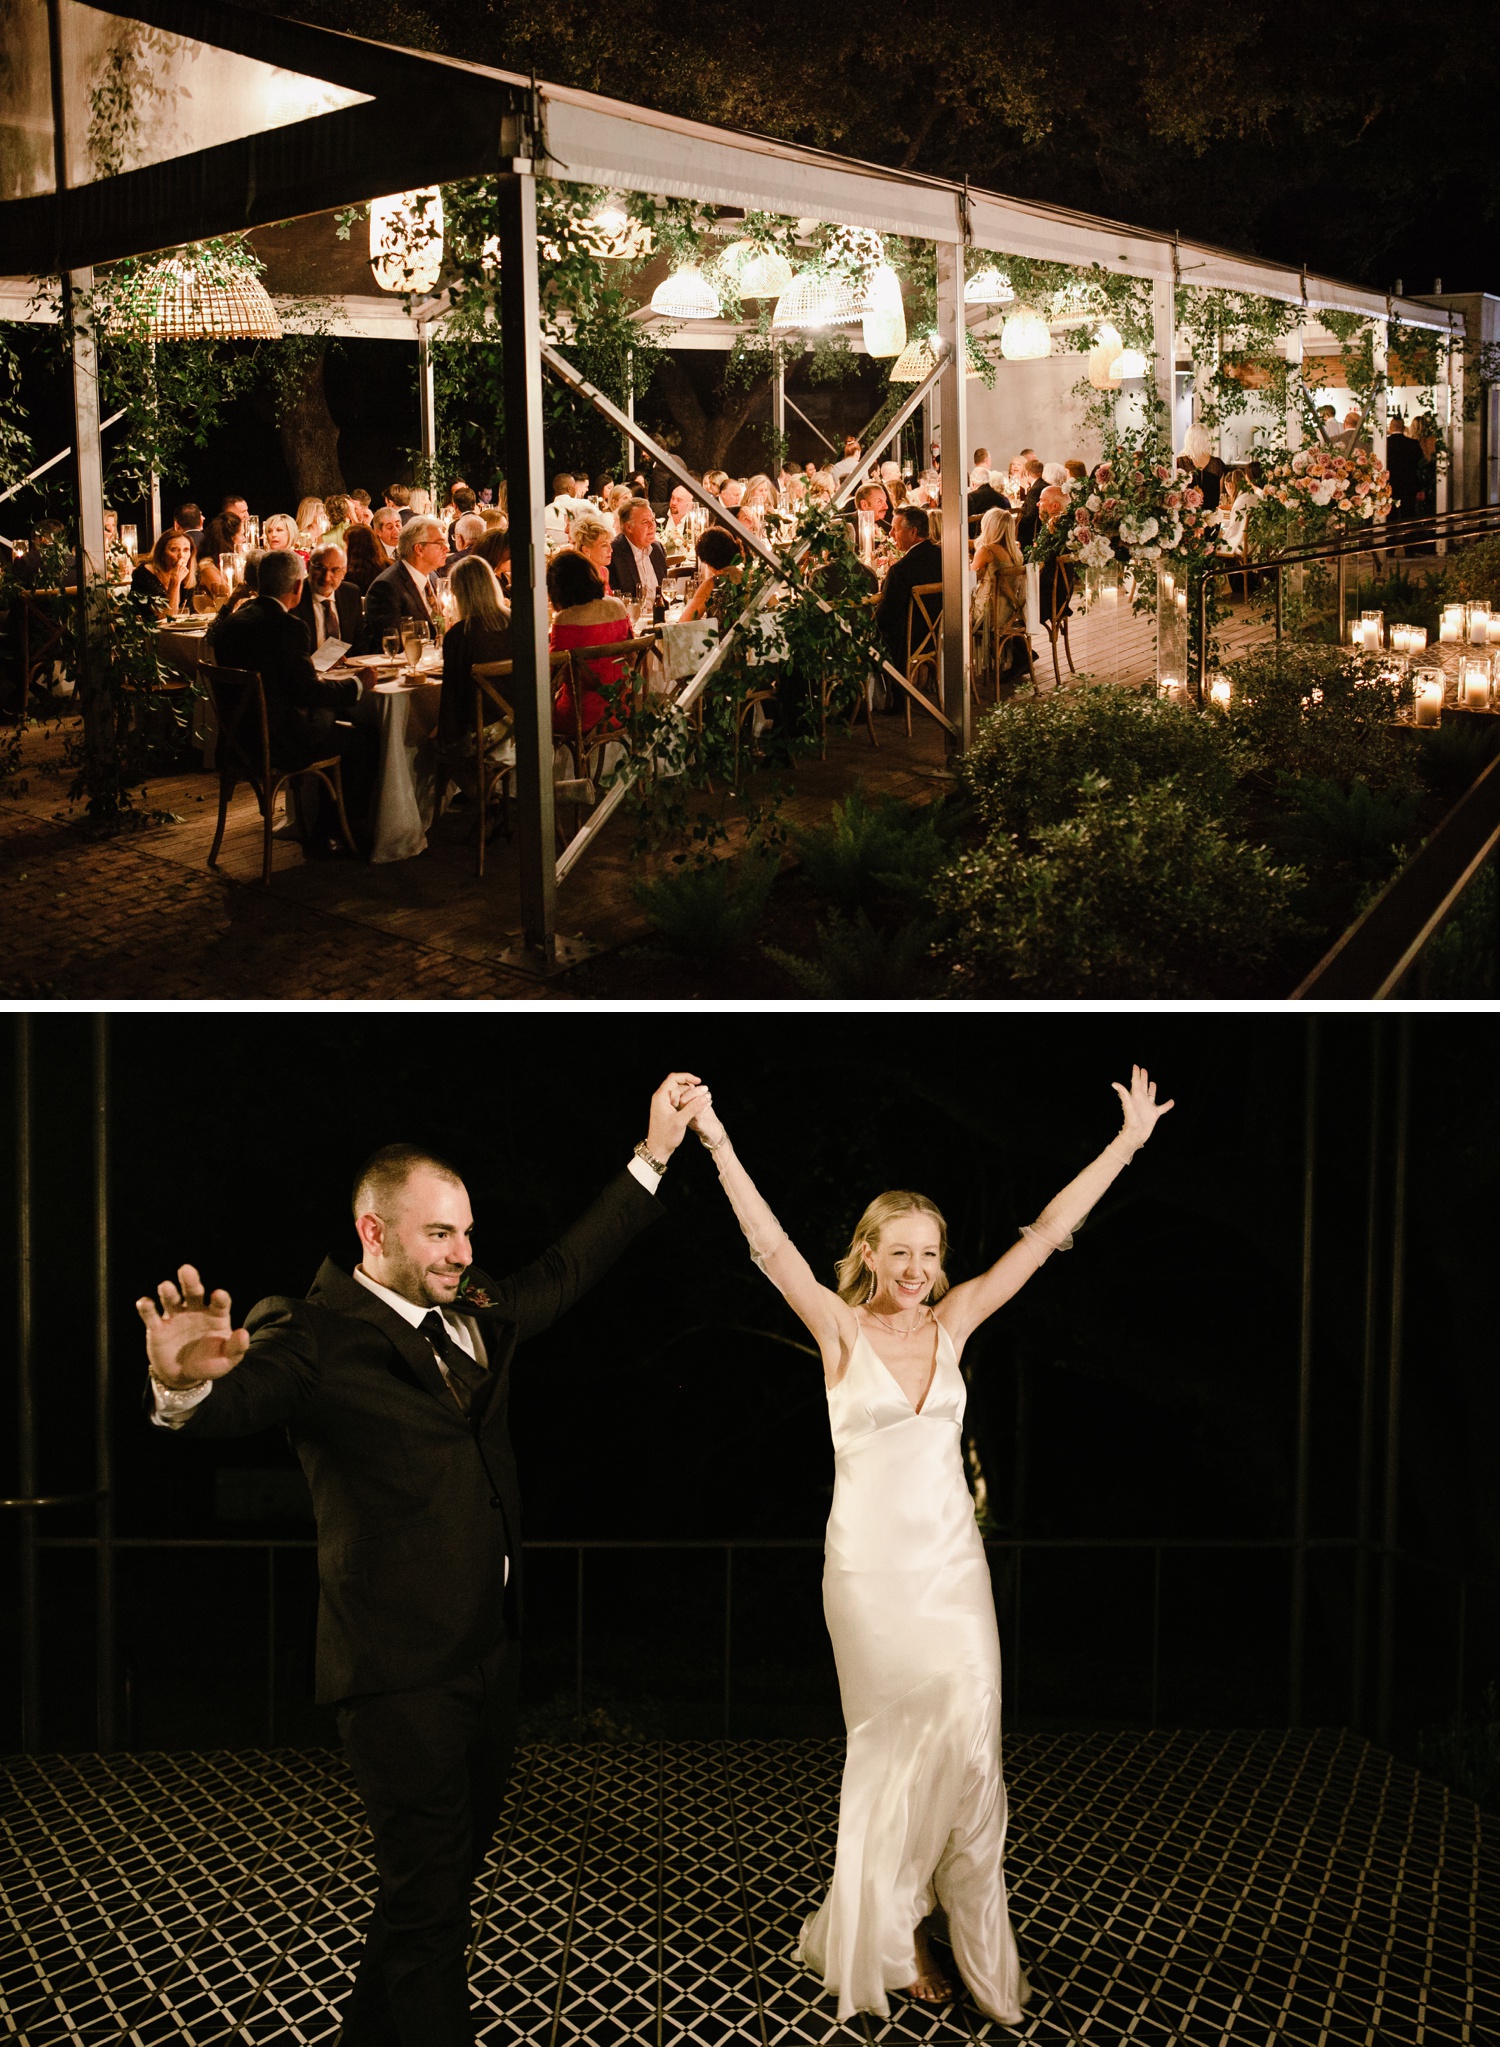 Indoor-outdoor wedding reception at Mattie's Austin